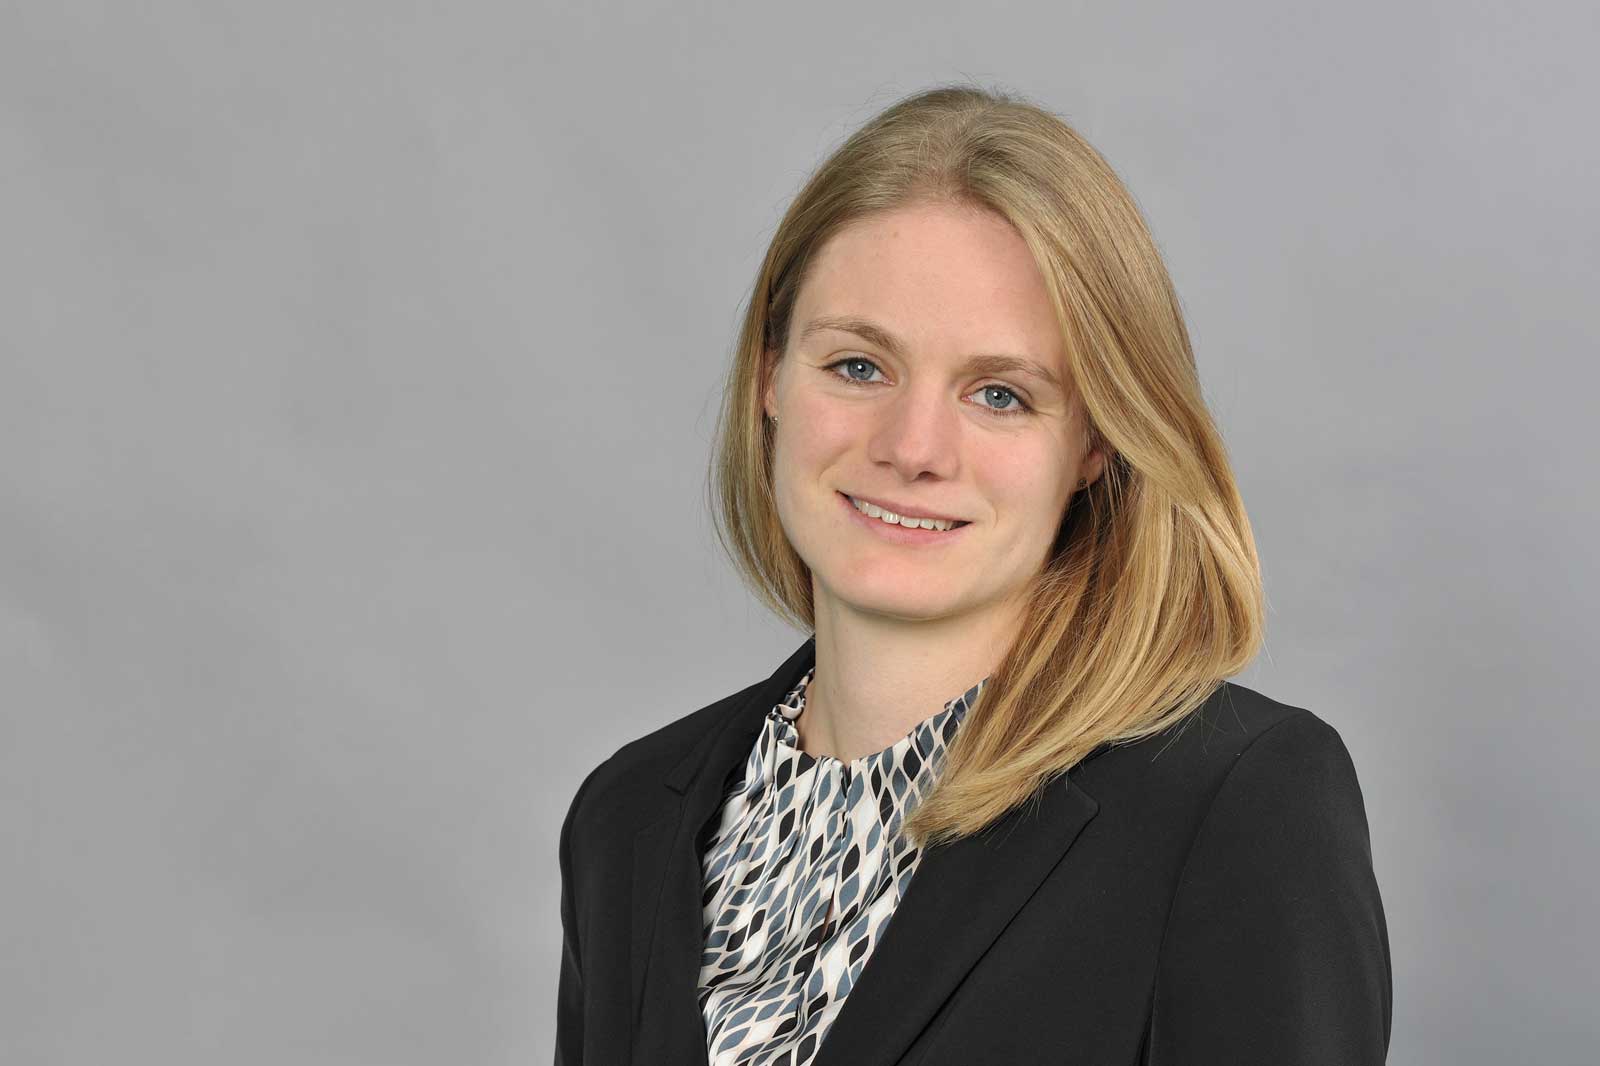 Janine Lins | Junior Projektingenieur @ RWE Technology GmbH